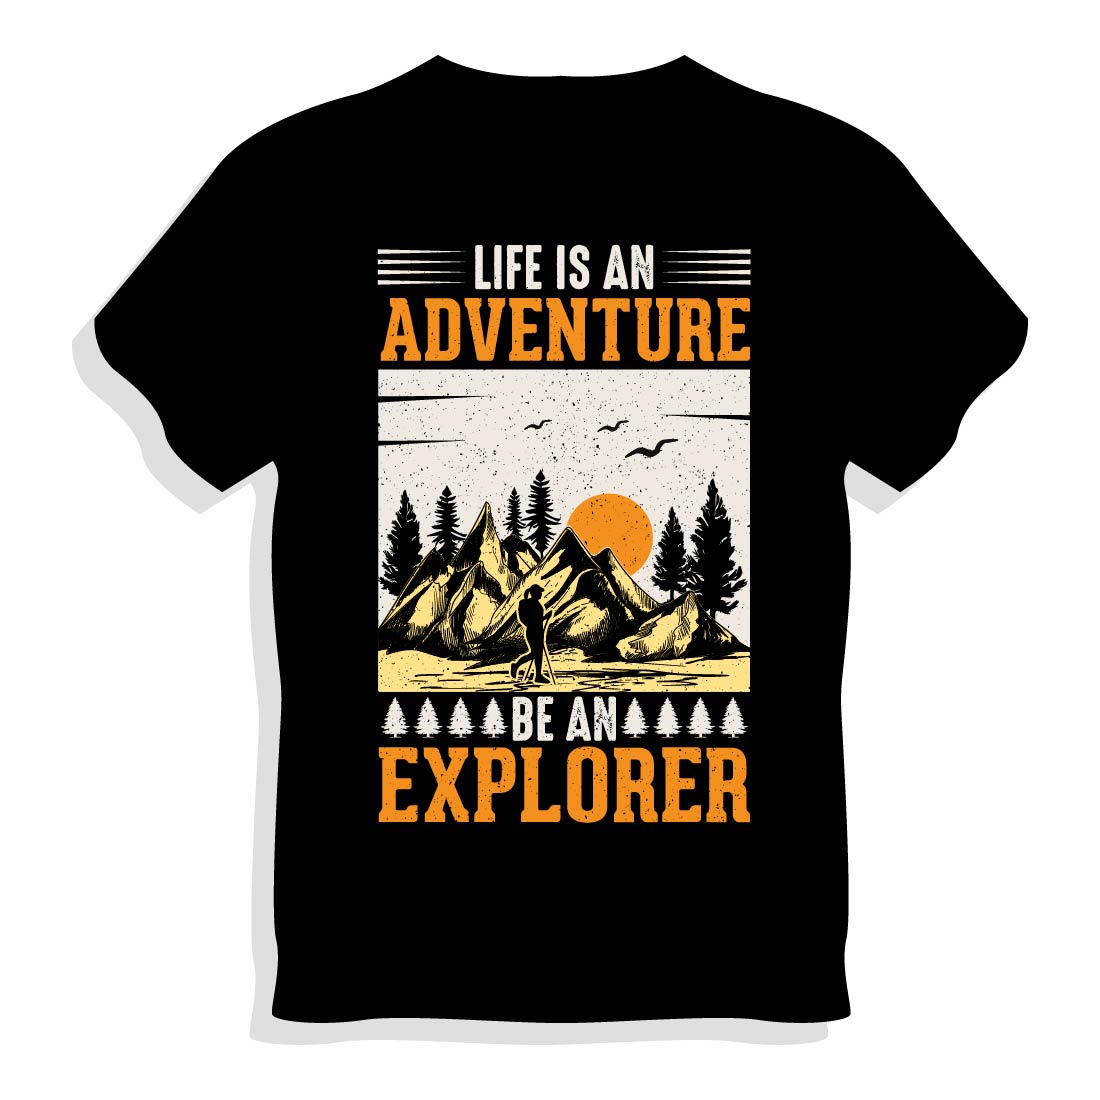 Mountain Adventure T-shirt Design cover image.